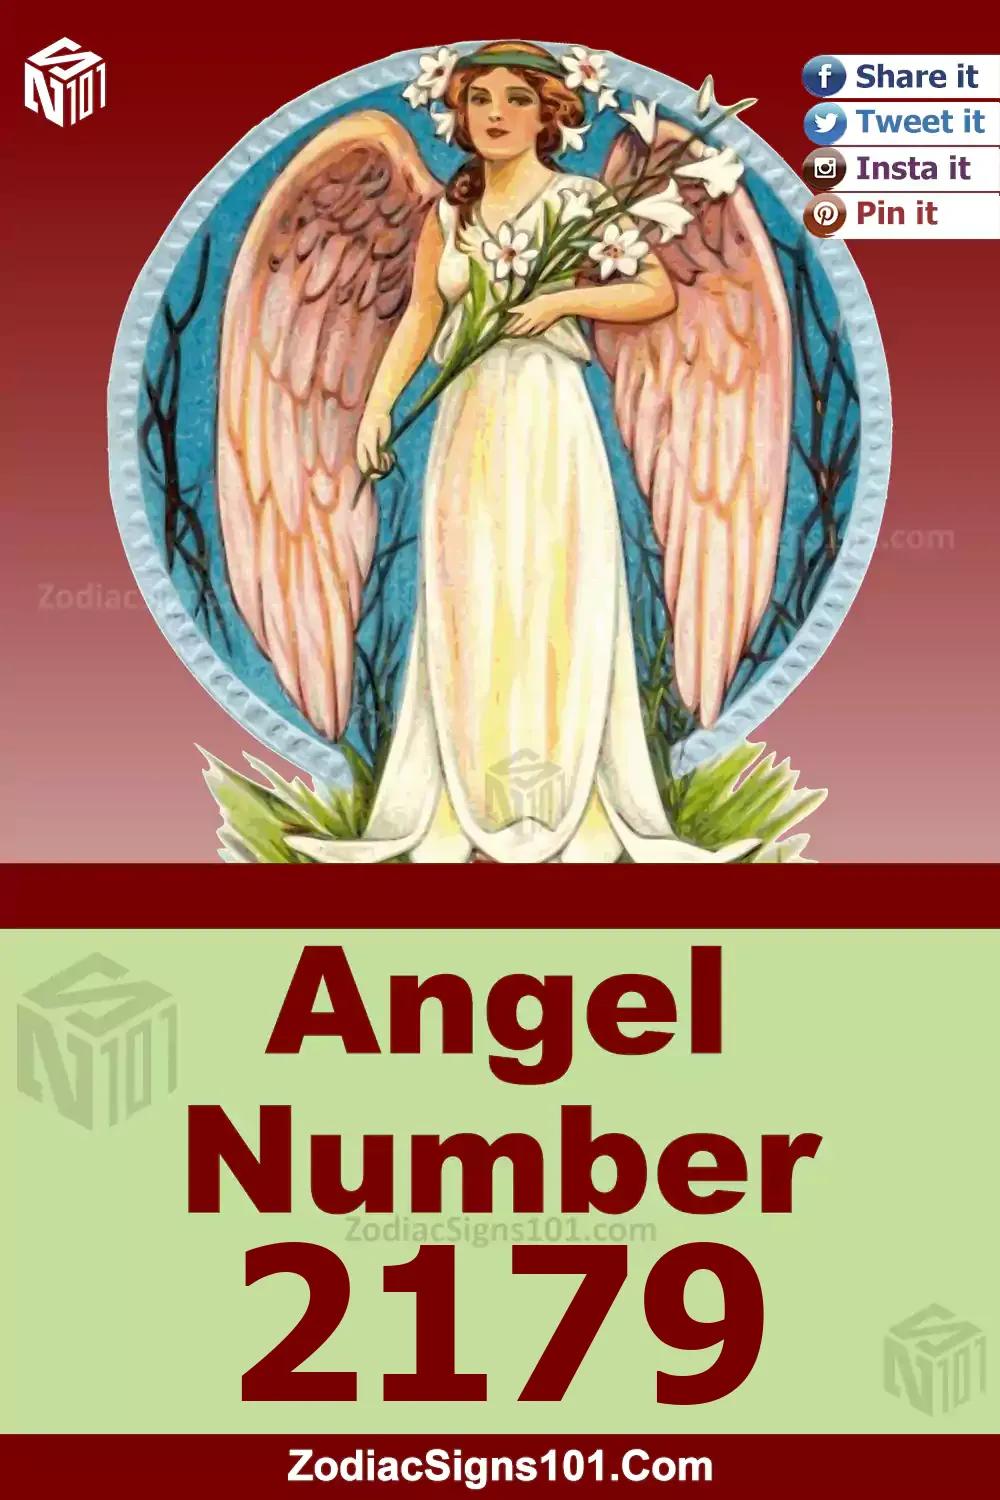 2179-Angel-Number-Meaning.jpg